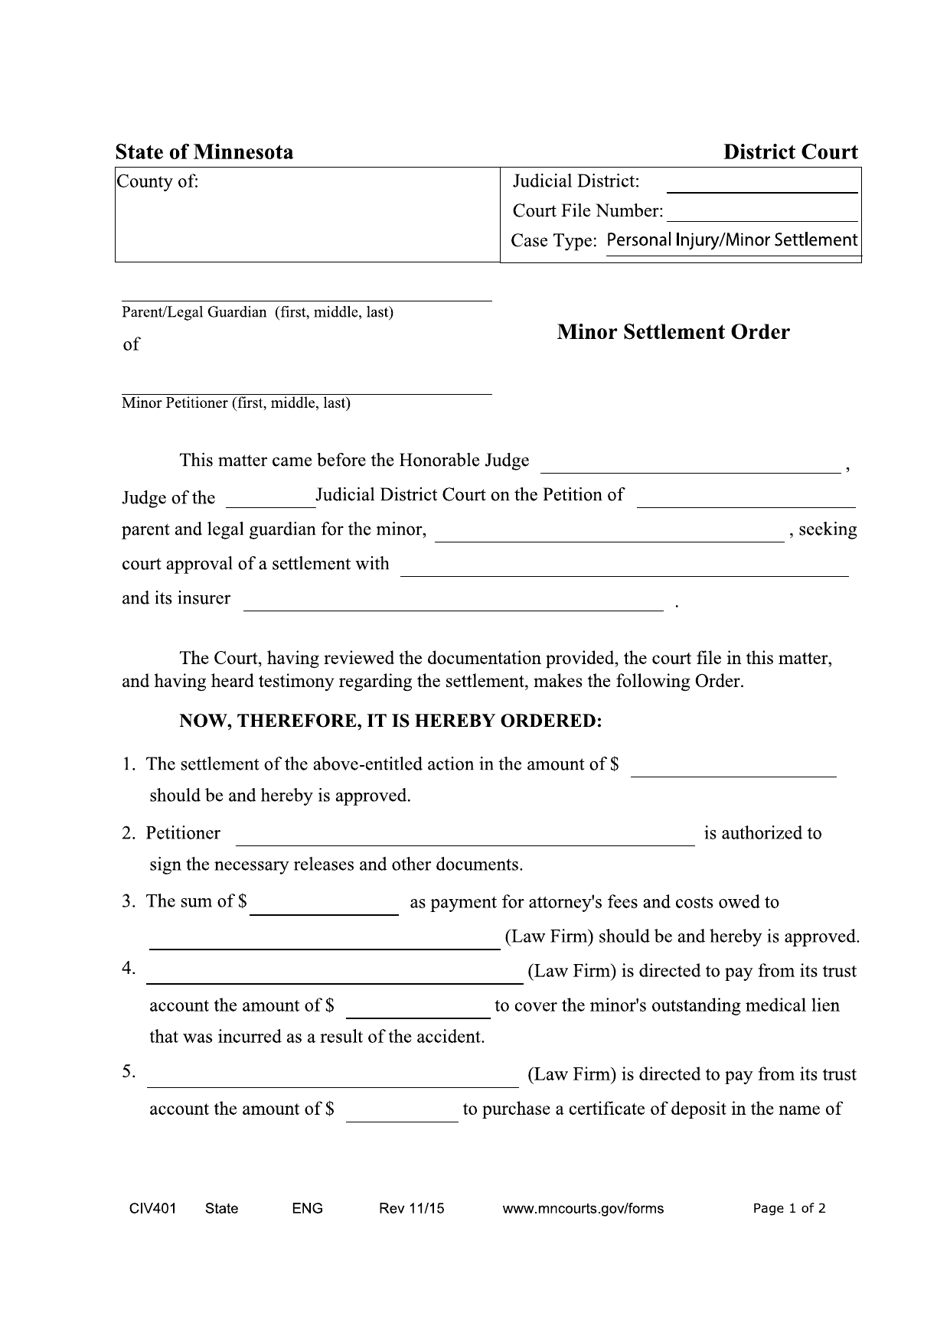 Form CIV401 Minor Settlement Order - Minnesota, Page 1